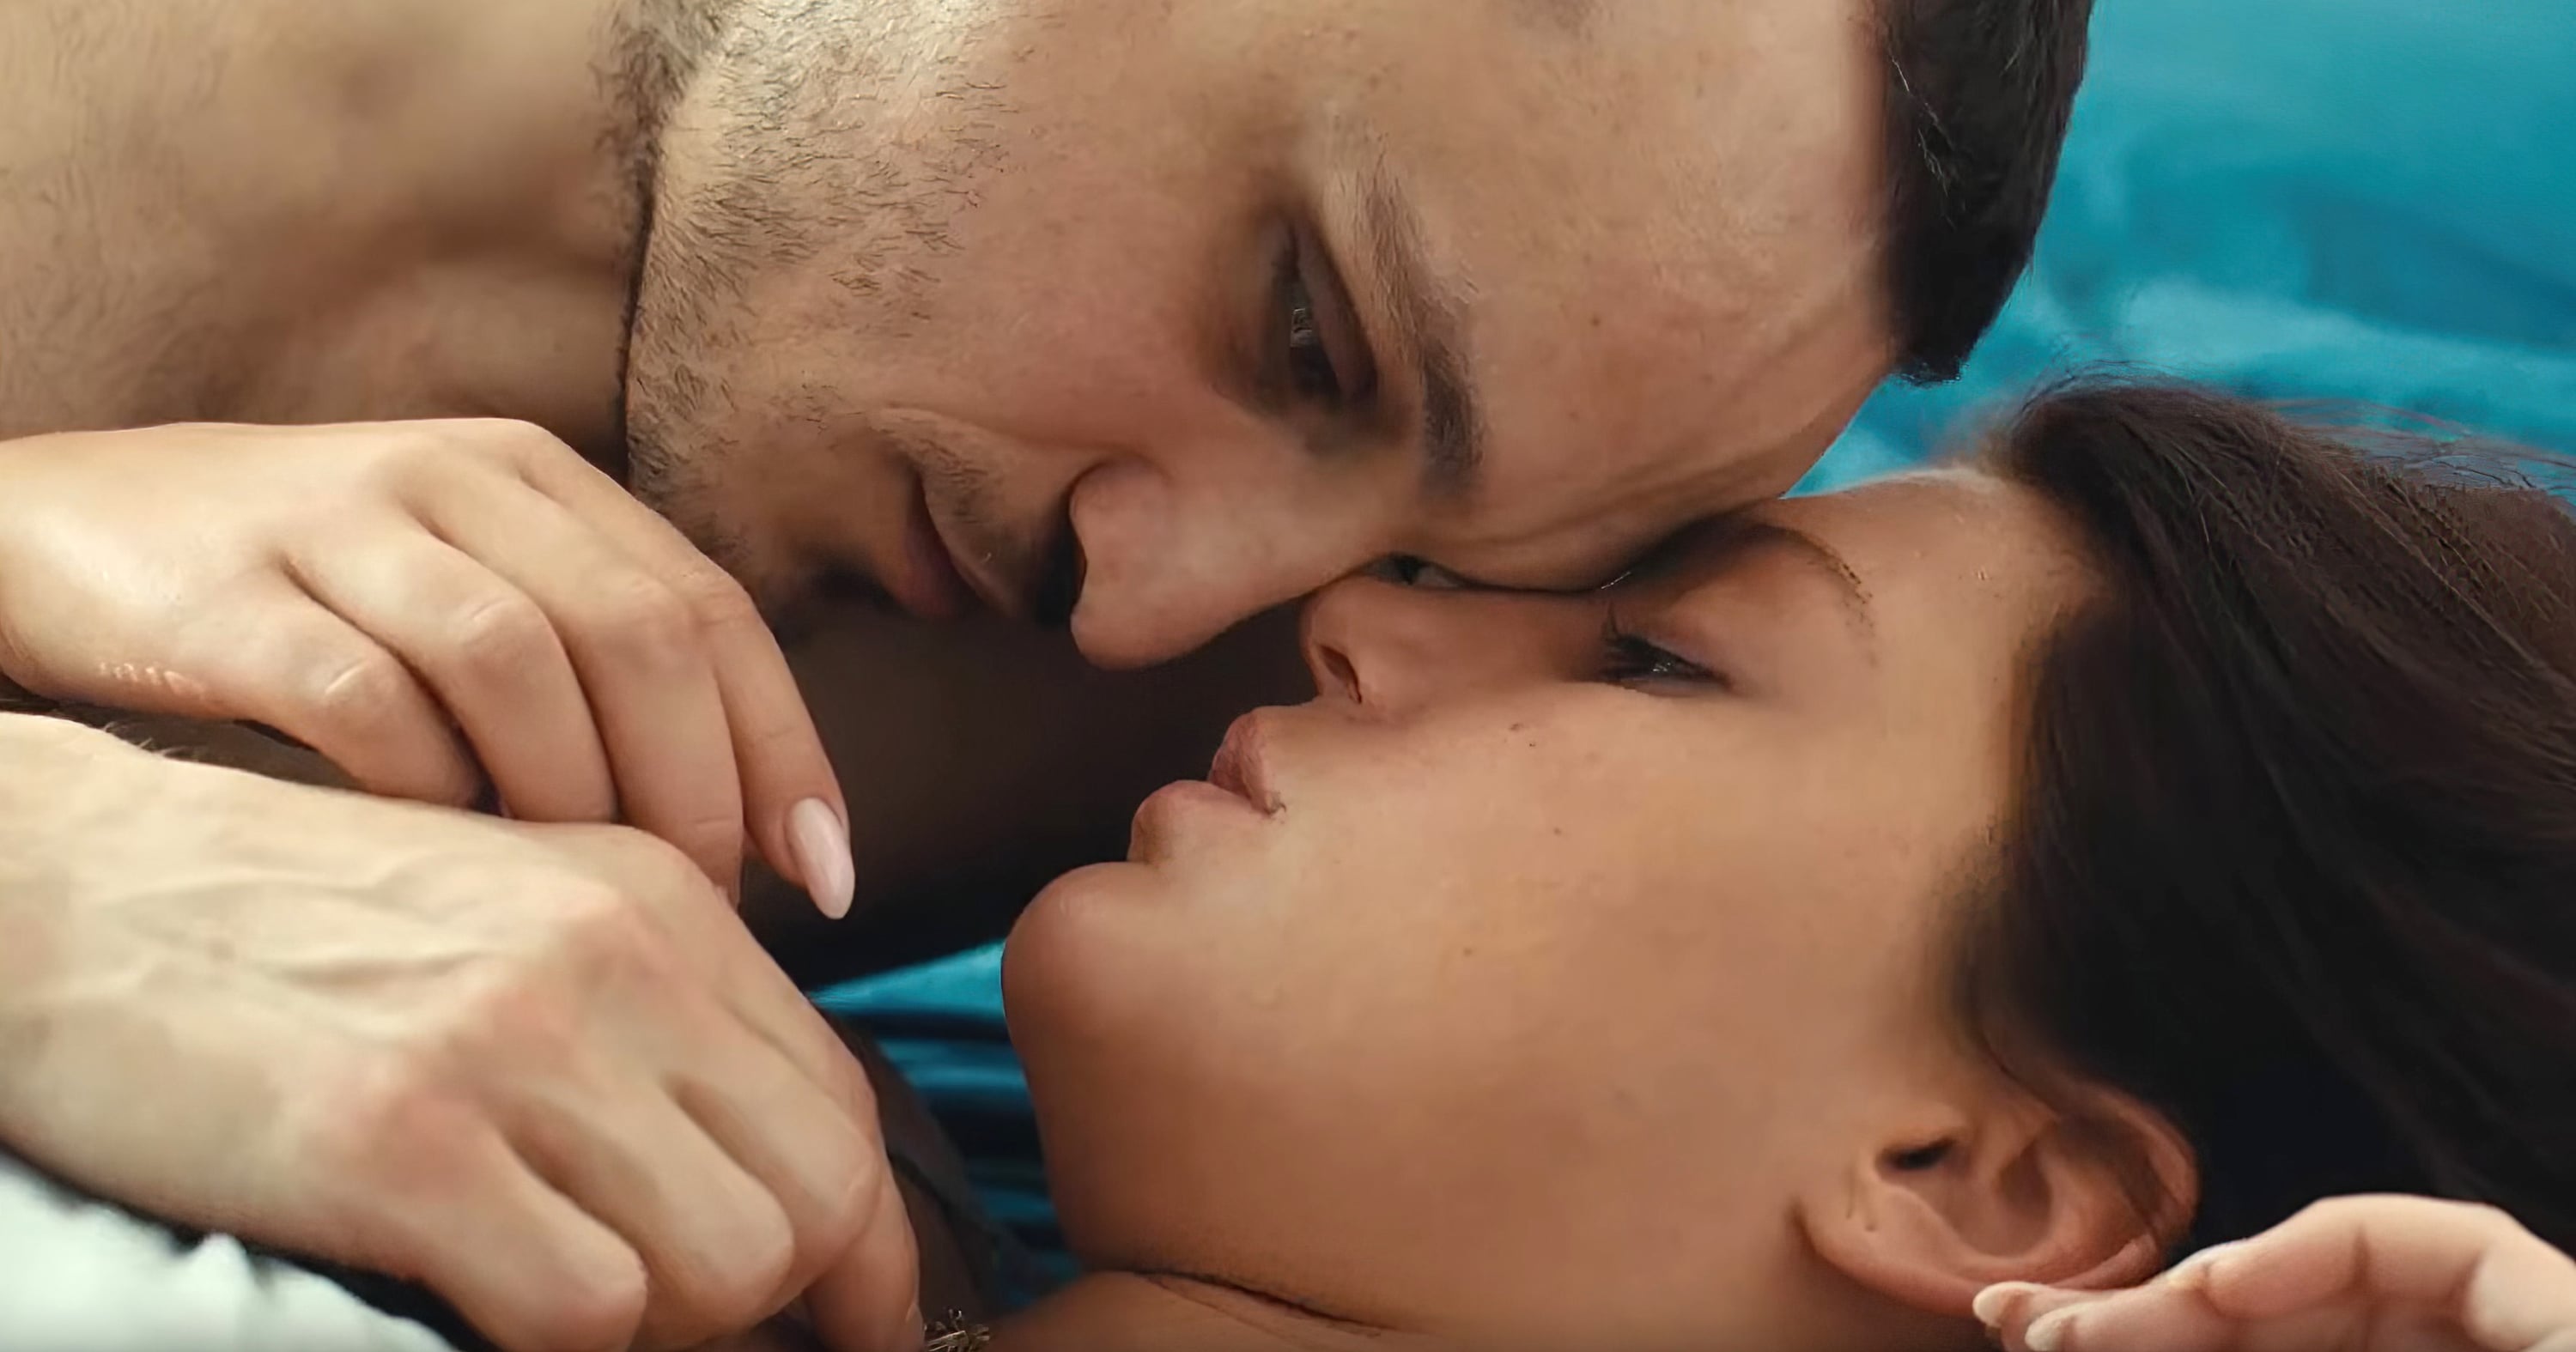 Sexiy Viedo Rometik Mp 3 - Best NC-17 Movies to Watch | POPSUGAR Love & Sex